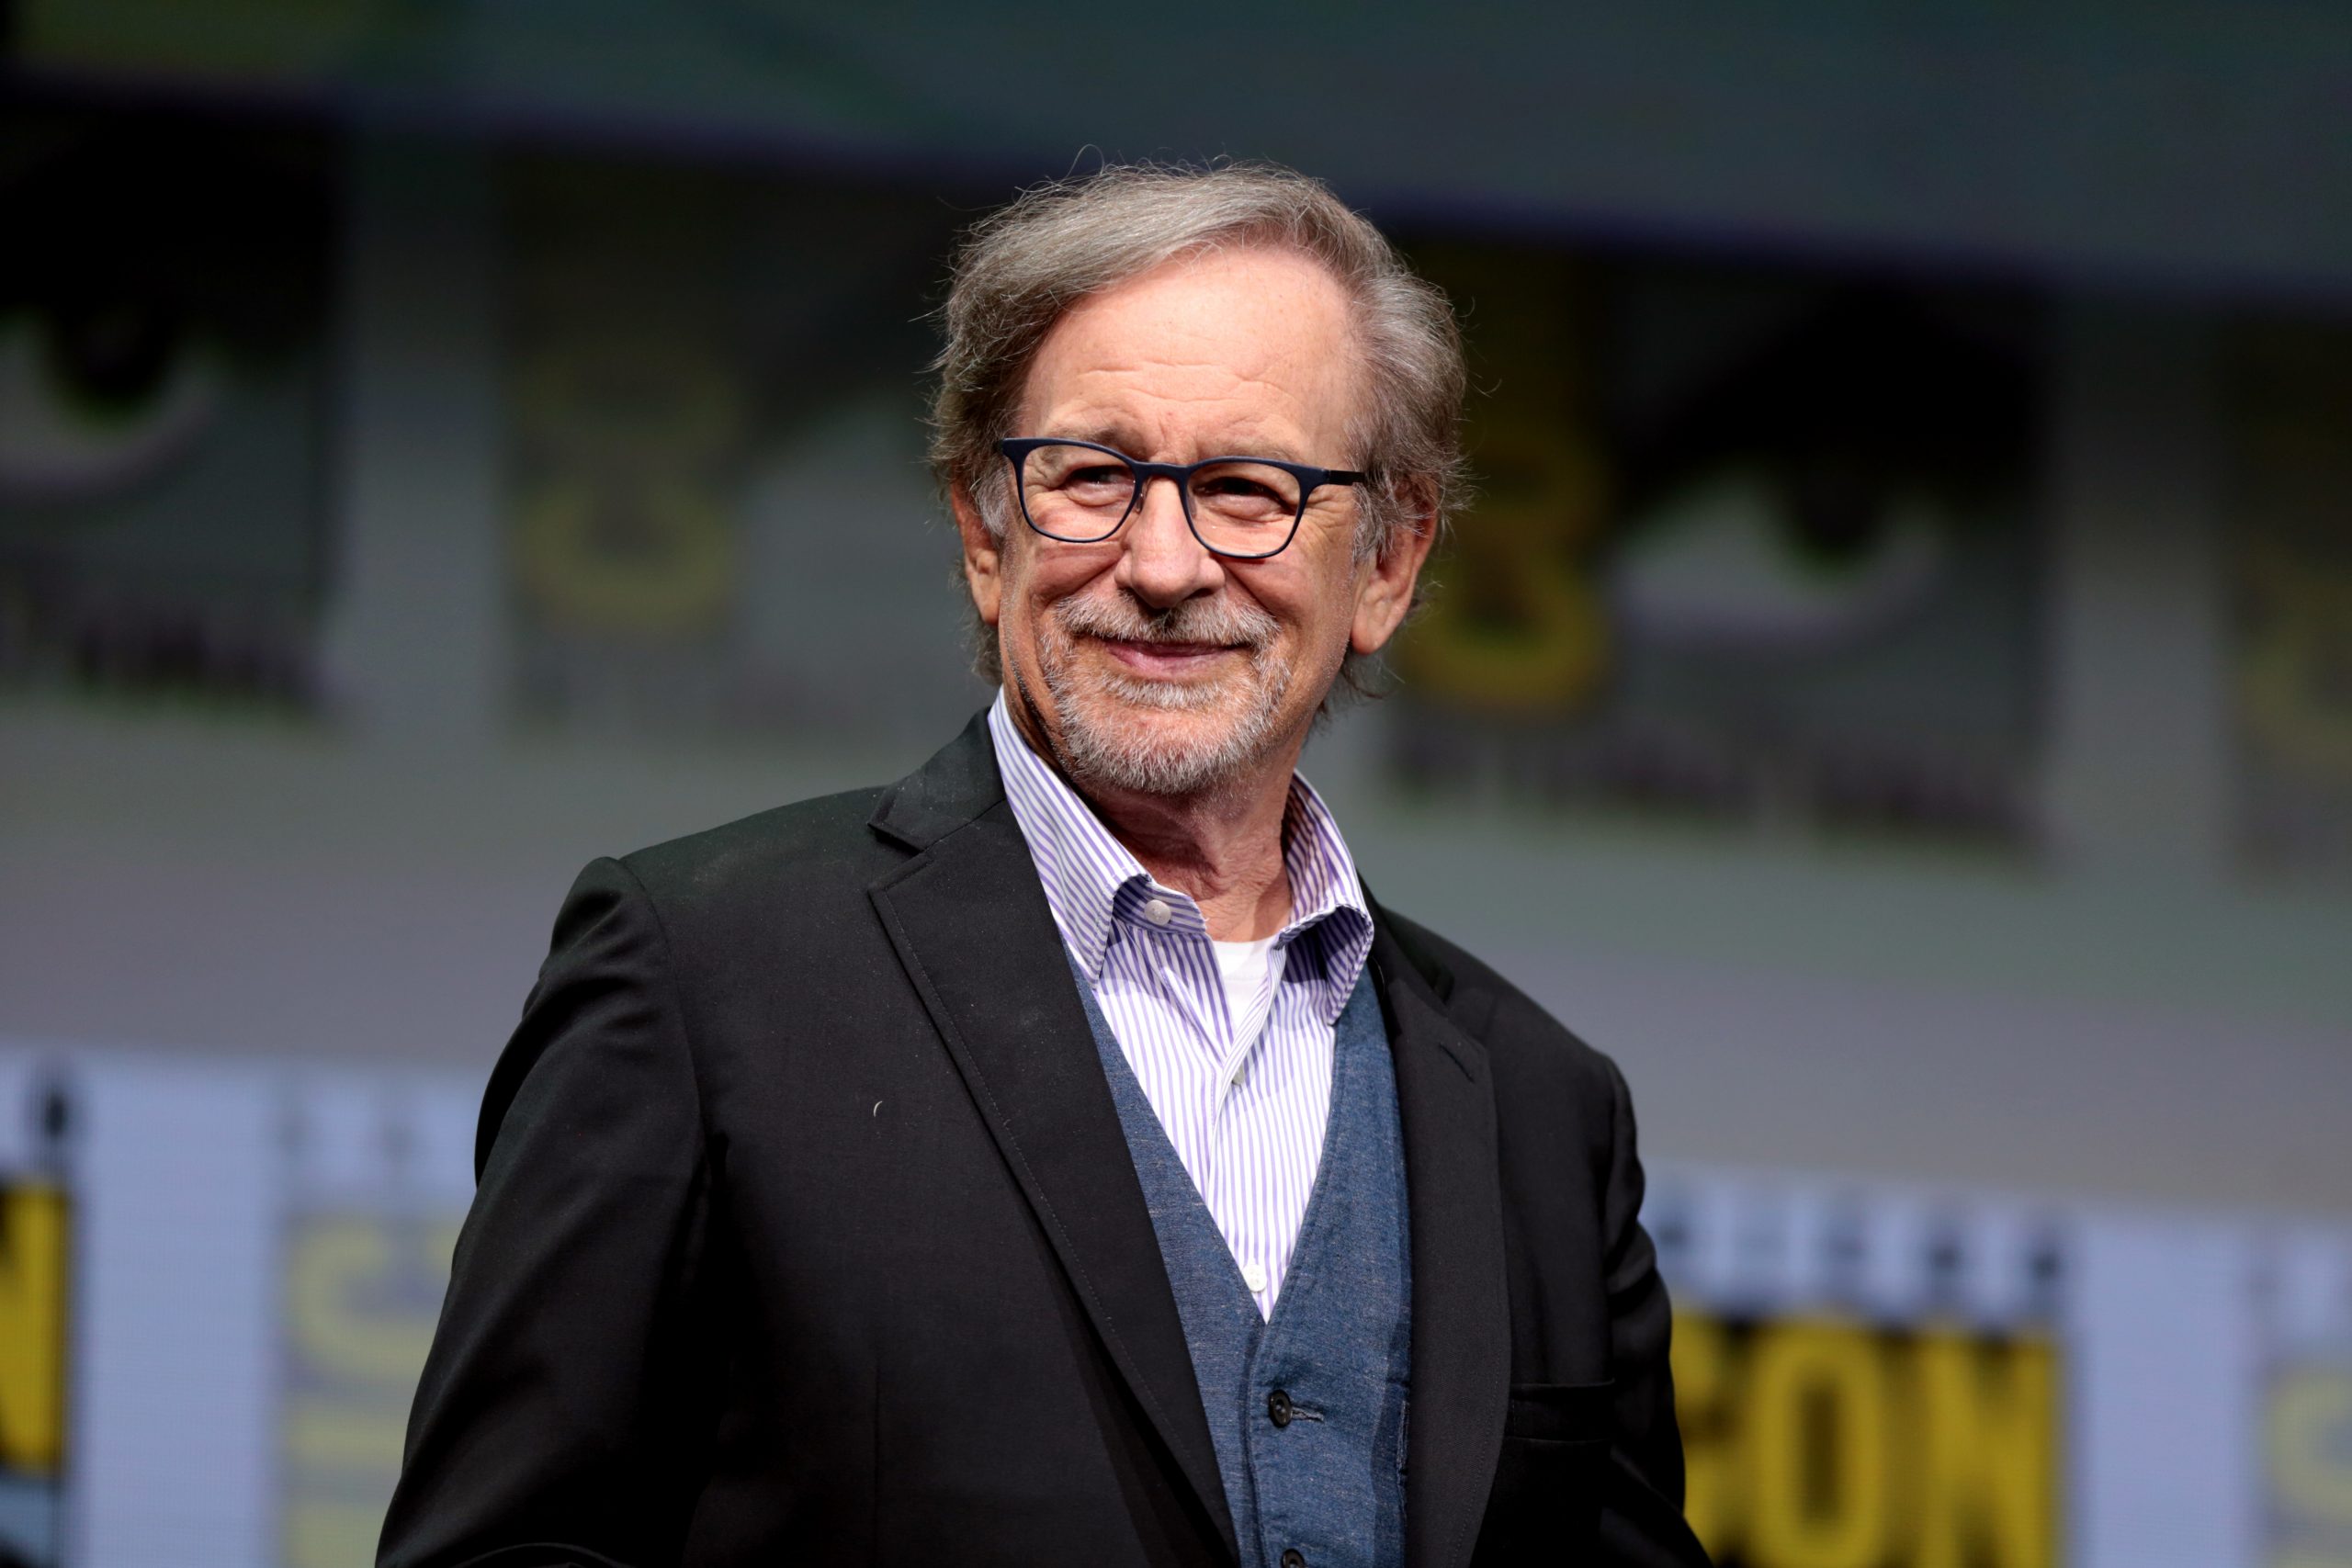 Portrait of Steven Spielberg at a Comicon convention